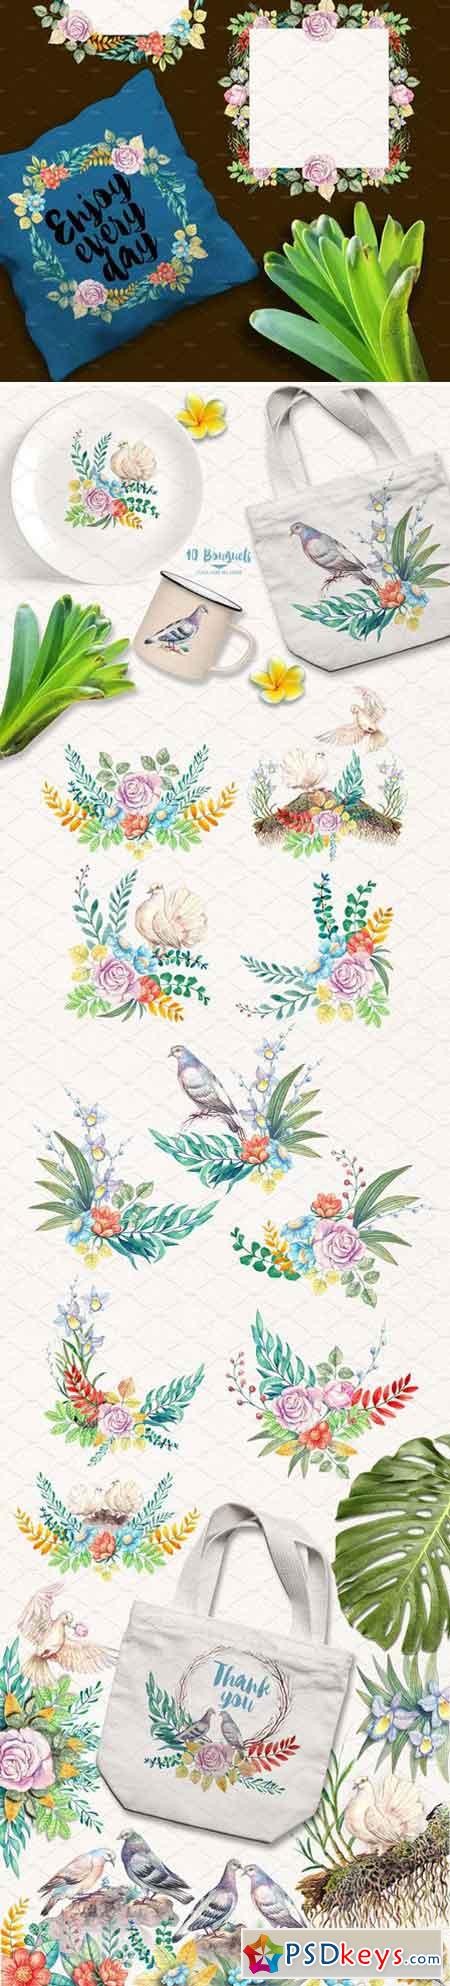 Watercolor Pigeons of Peace 2256487